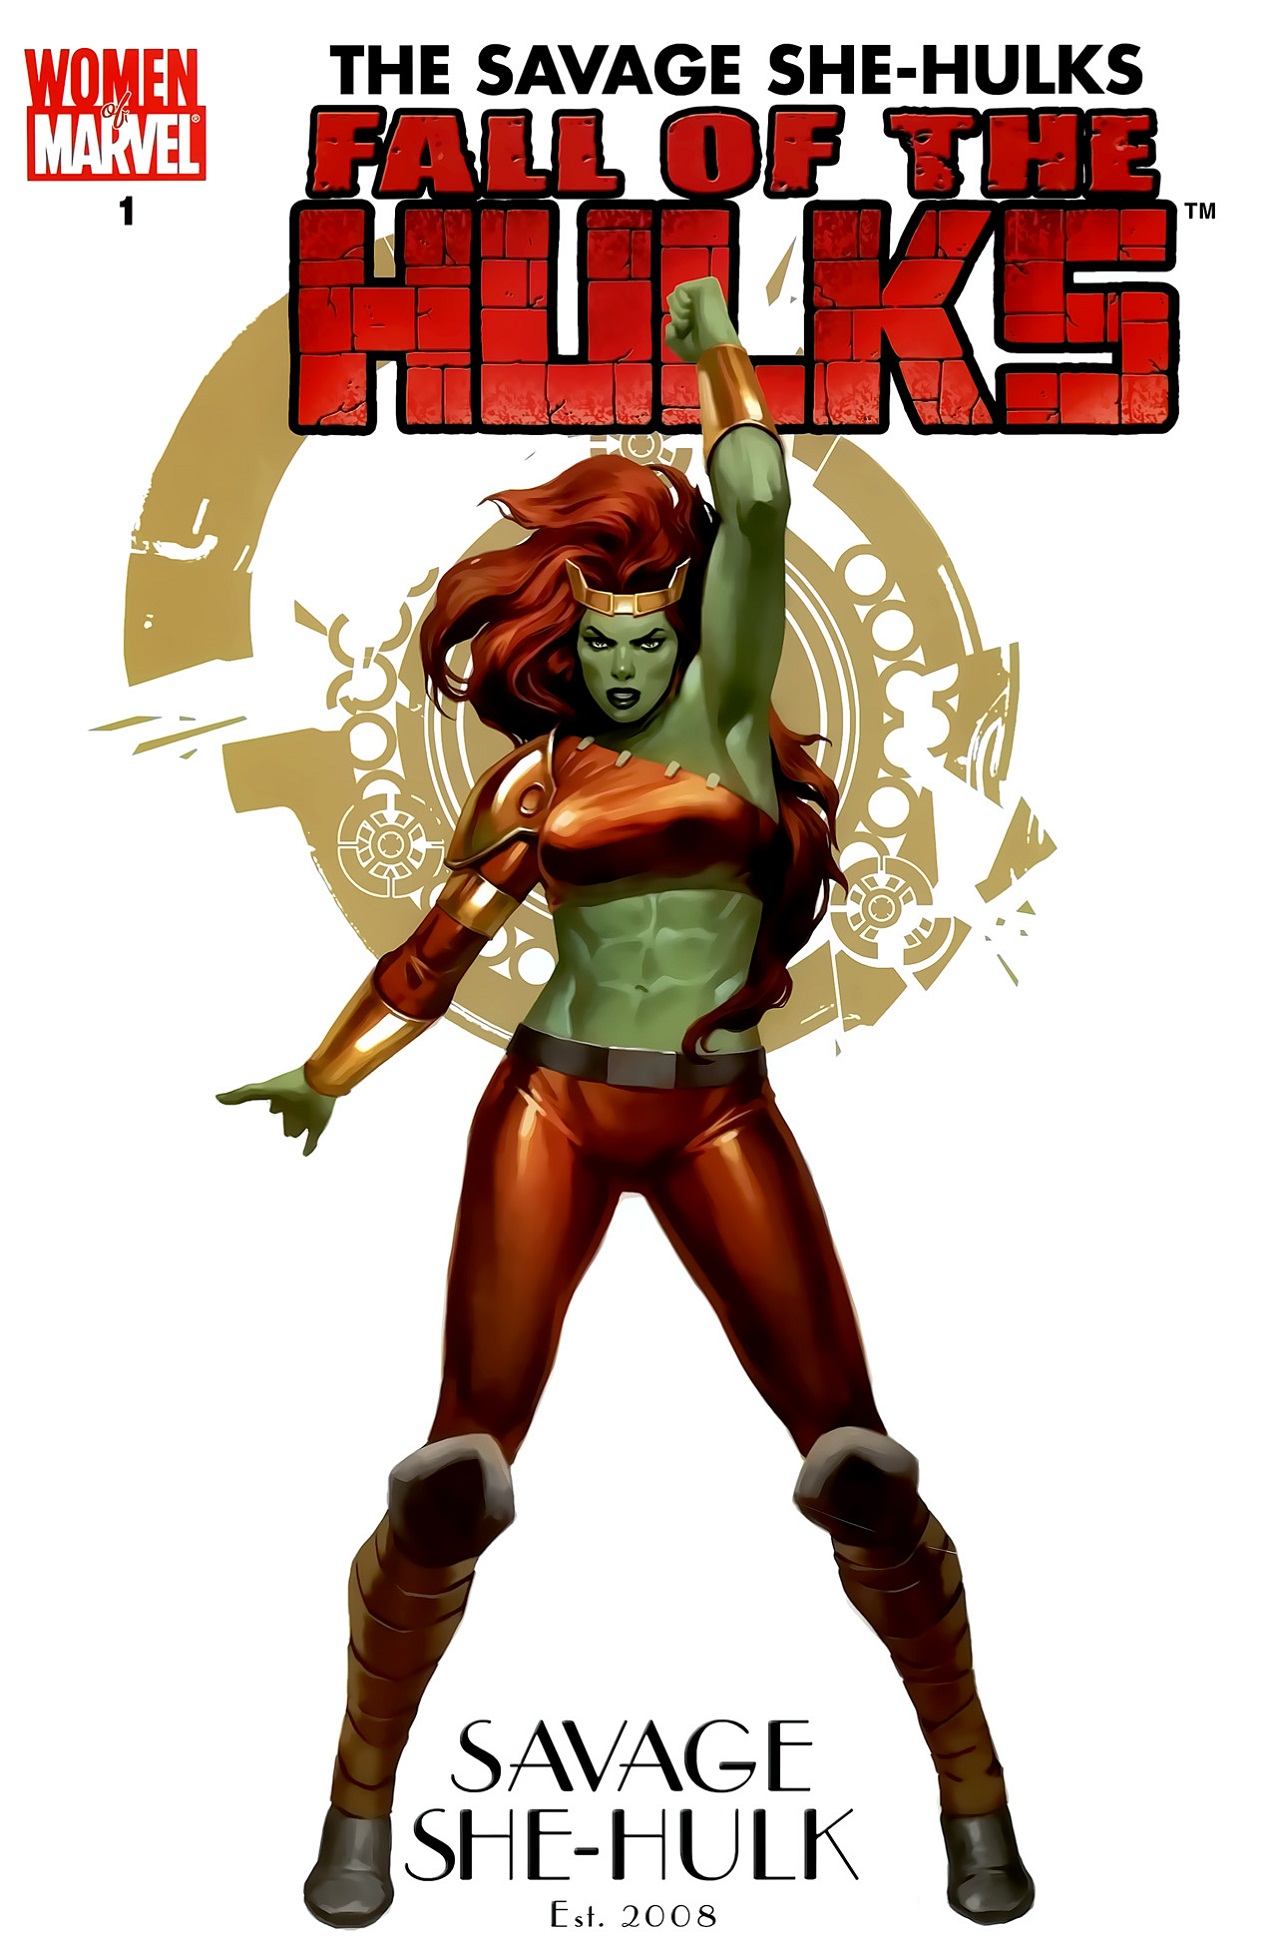 FALL OF THE HULKS: The Savage She-Hulks #1 WOMEN of MARVEL